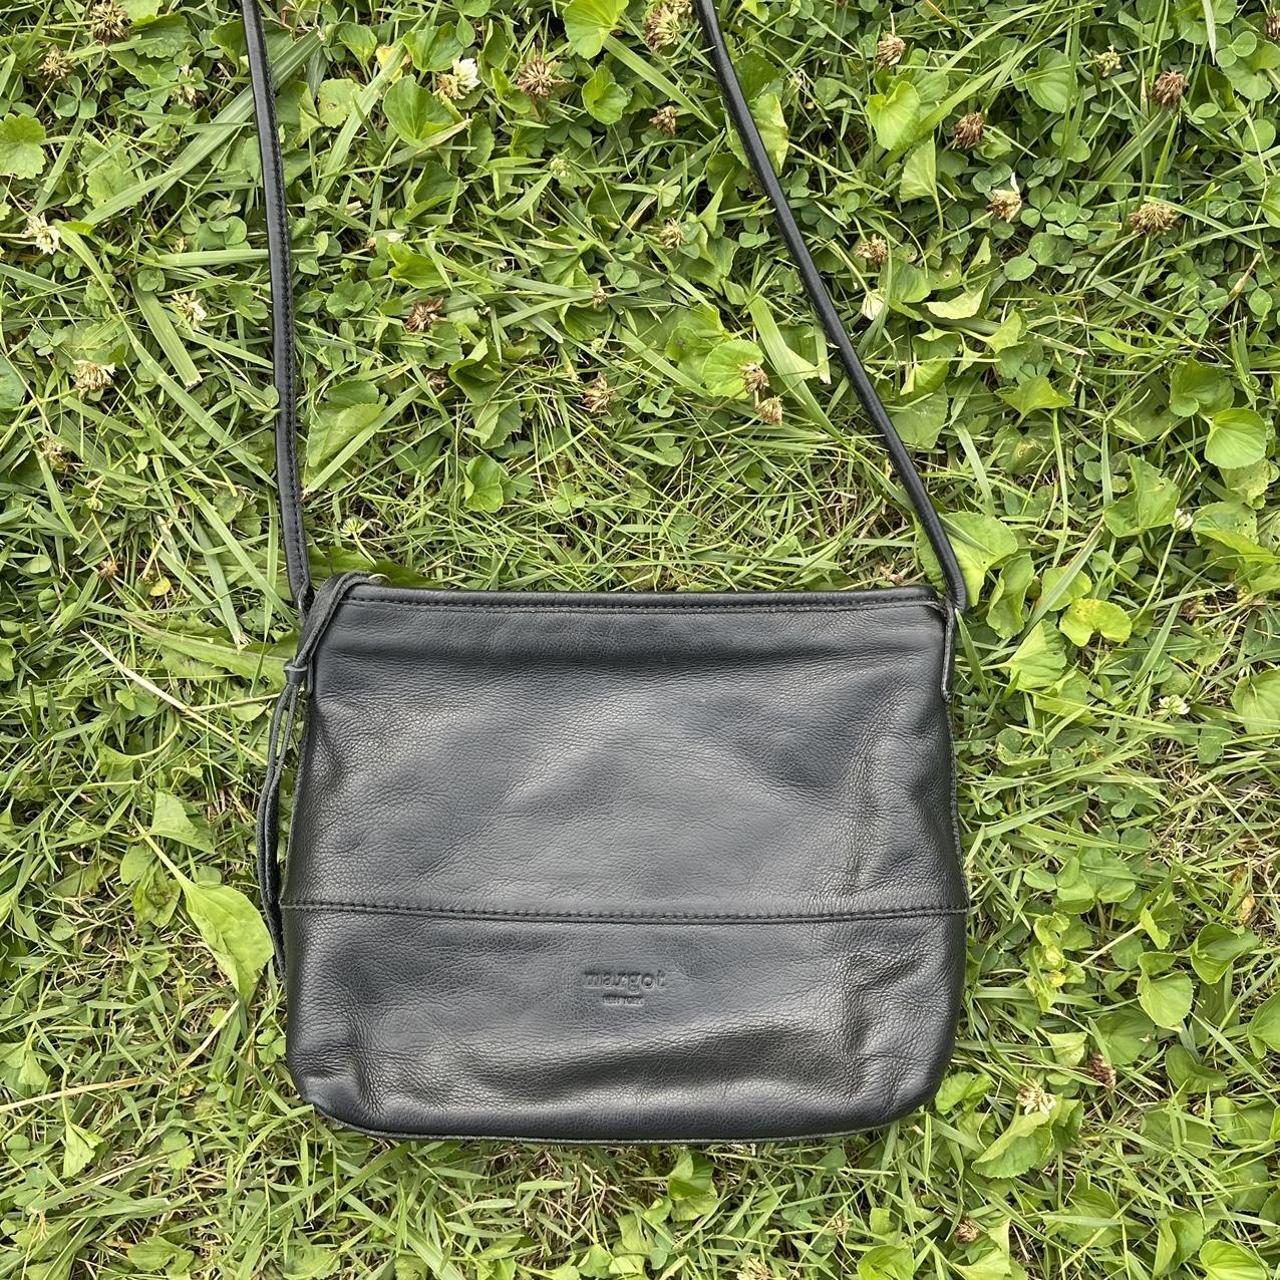 Women's Casual Bag - Black